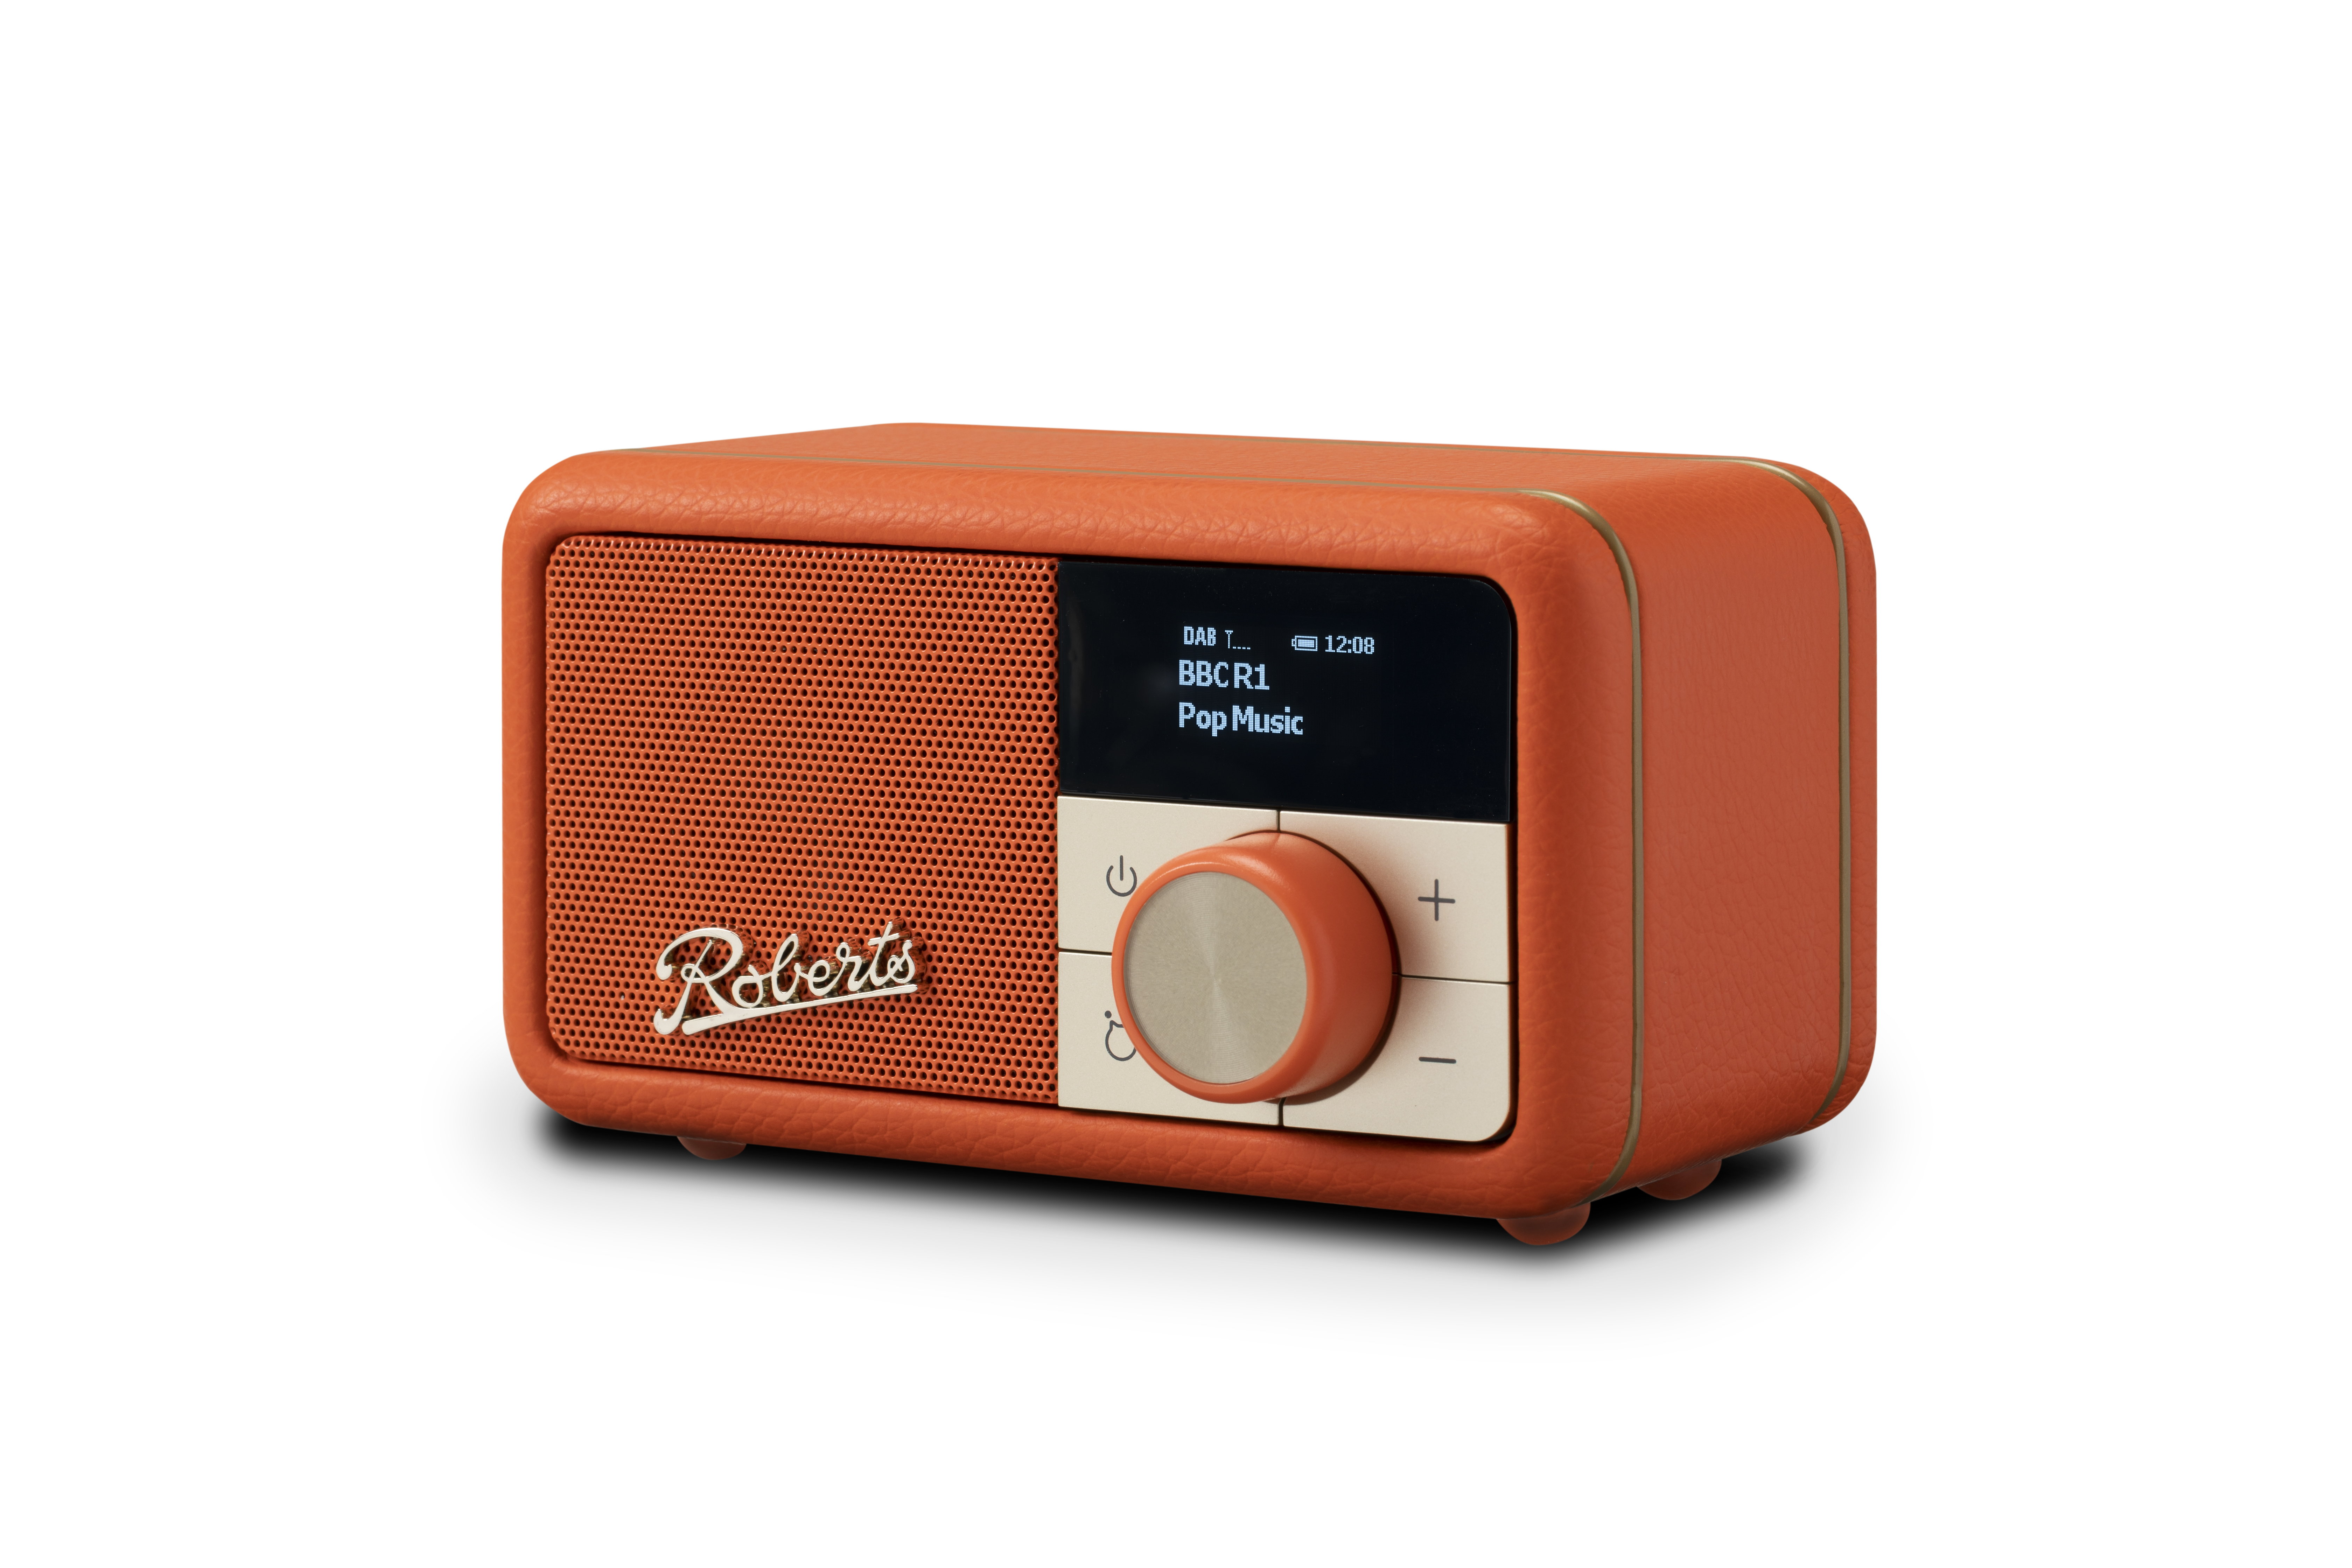 ROBERTS RADIO Revival Petite tragbares mit integriertem Digitalradio, / DAB+ und Akku orange pop | Bluetooth Orange FM Radio DAB+, 